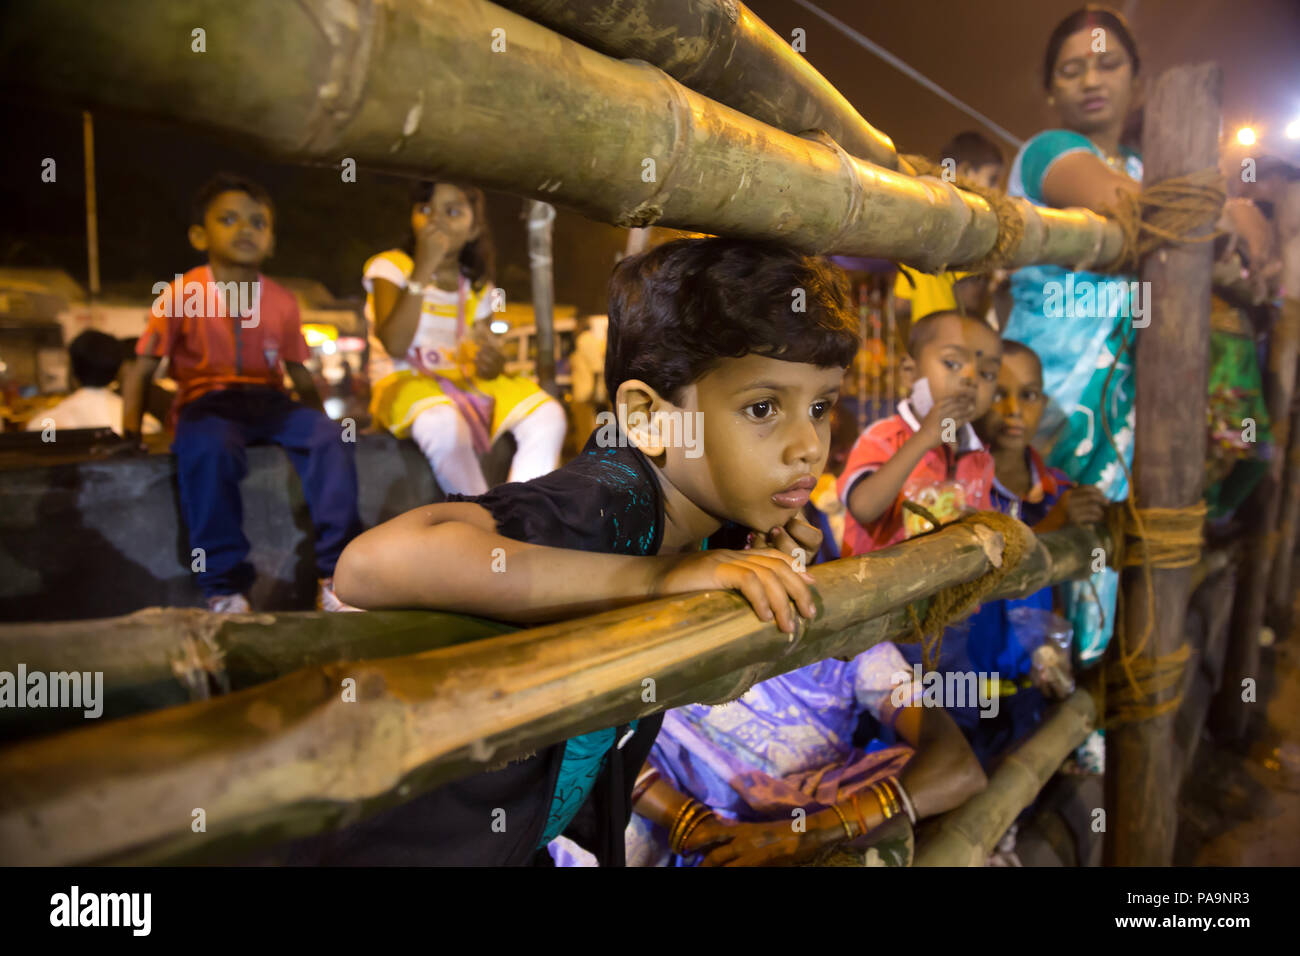 People and crowd during Durga puja celebration in Kolkata, India Stock Photo